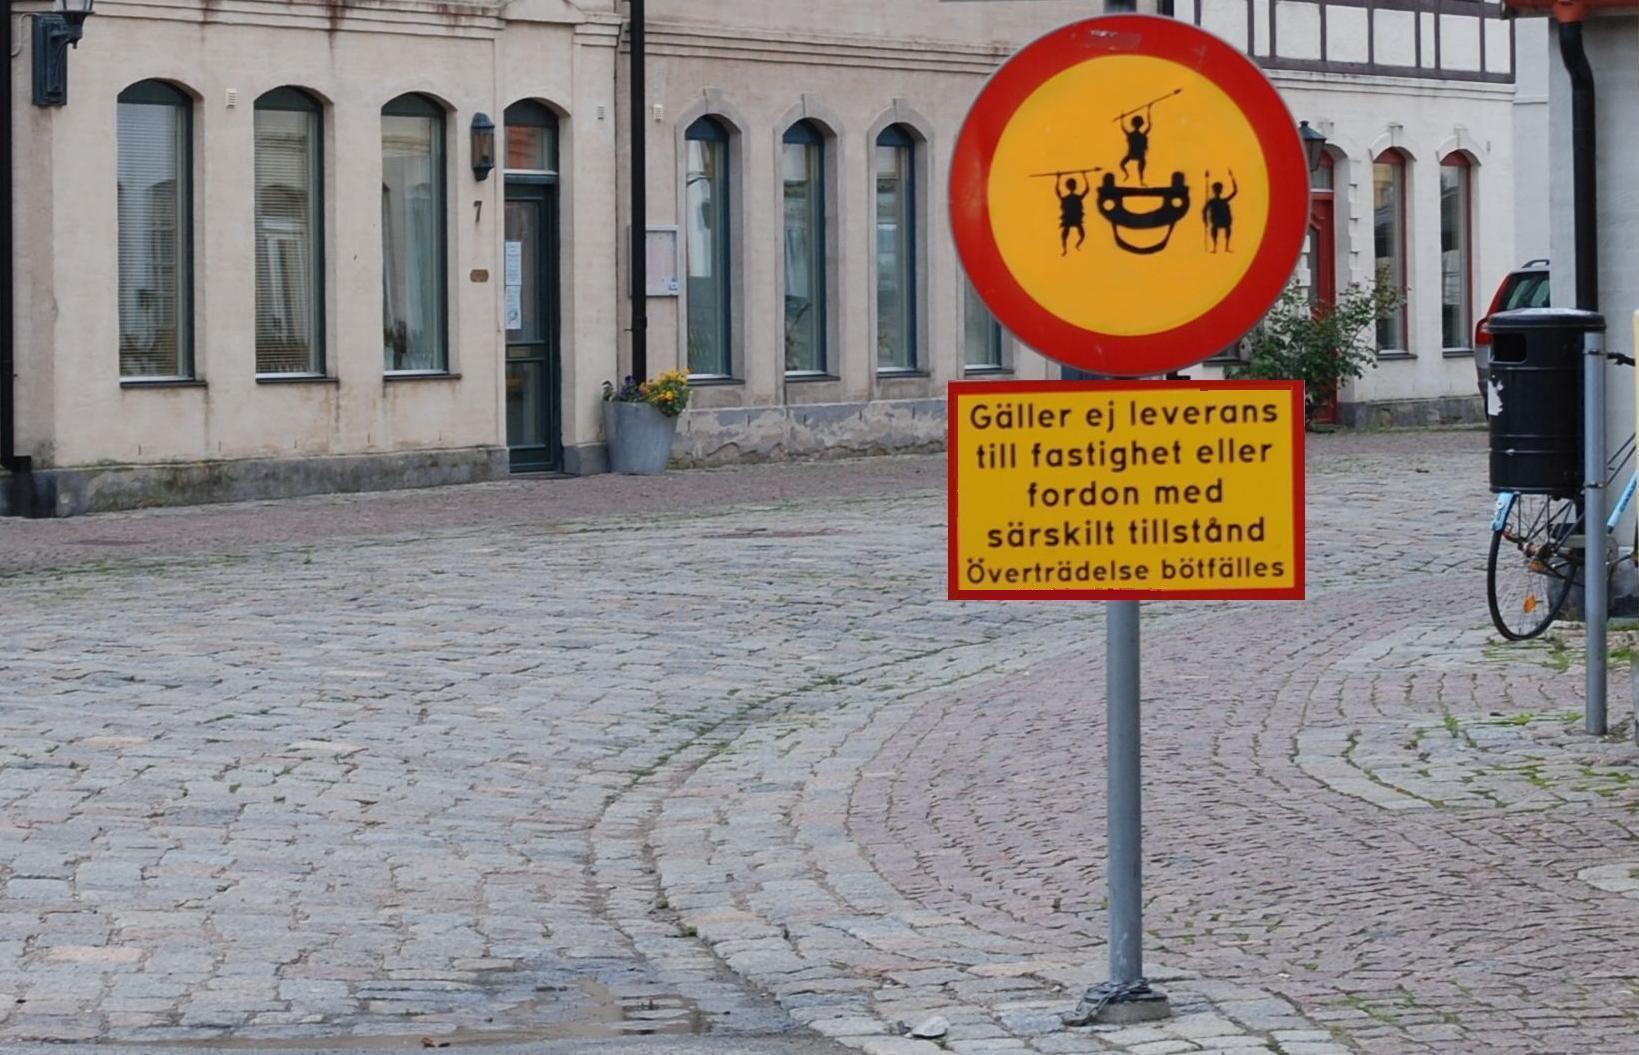 funny swedish street sign